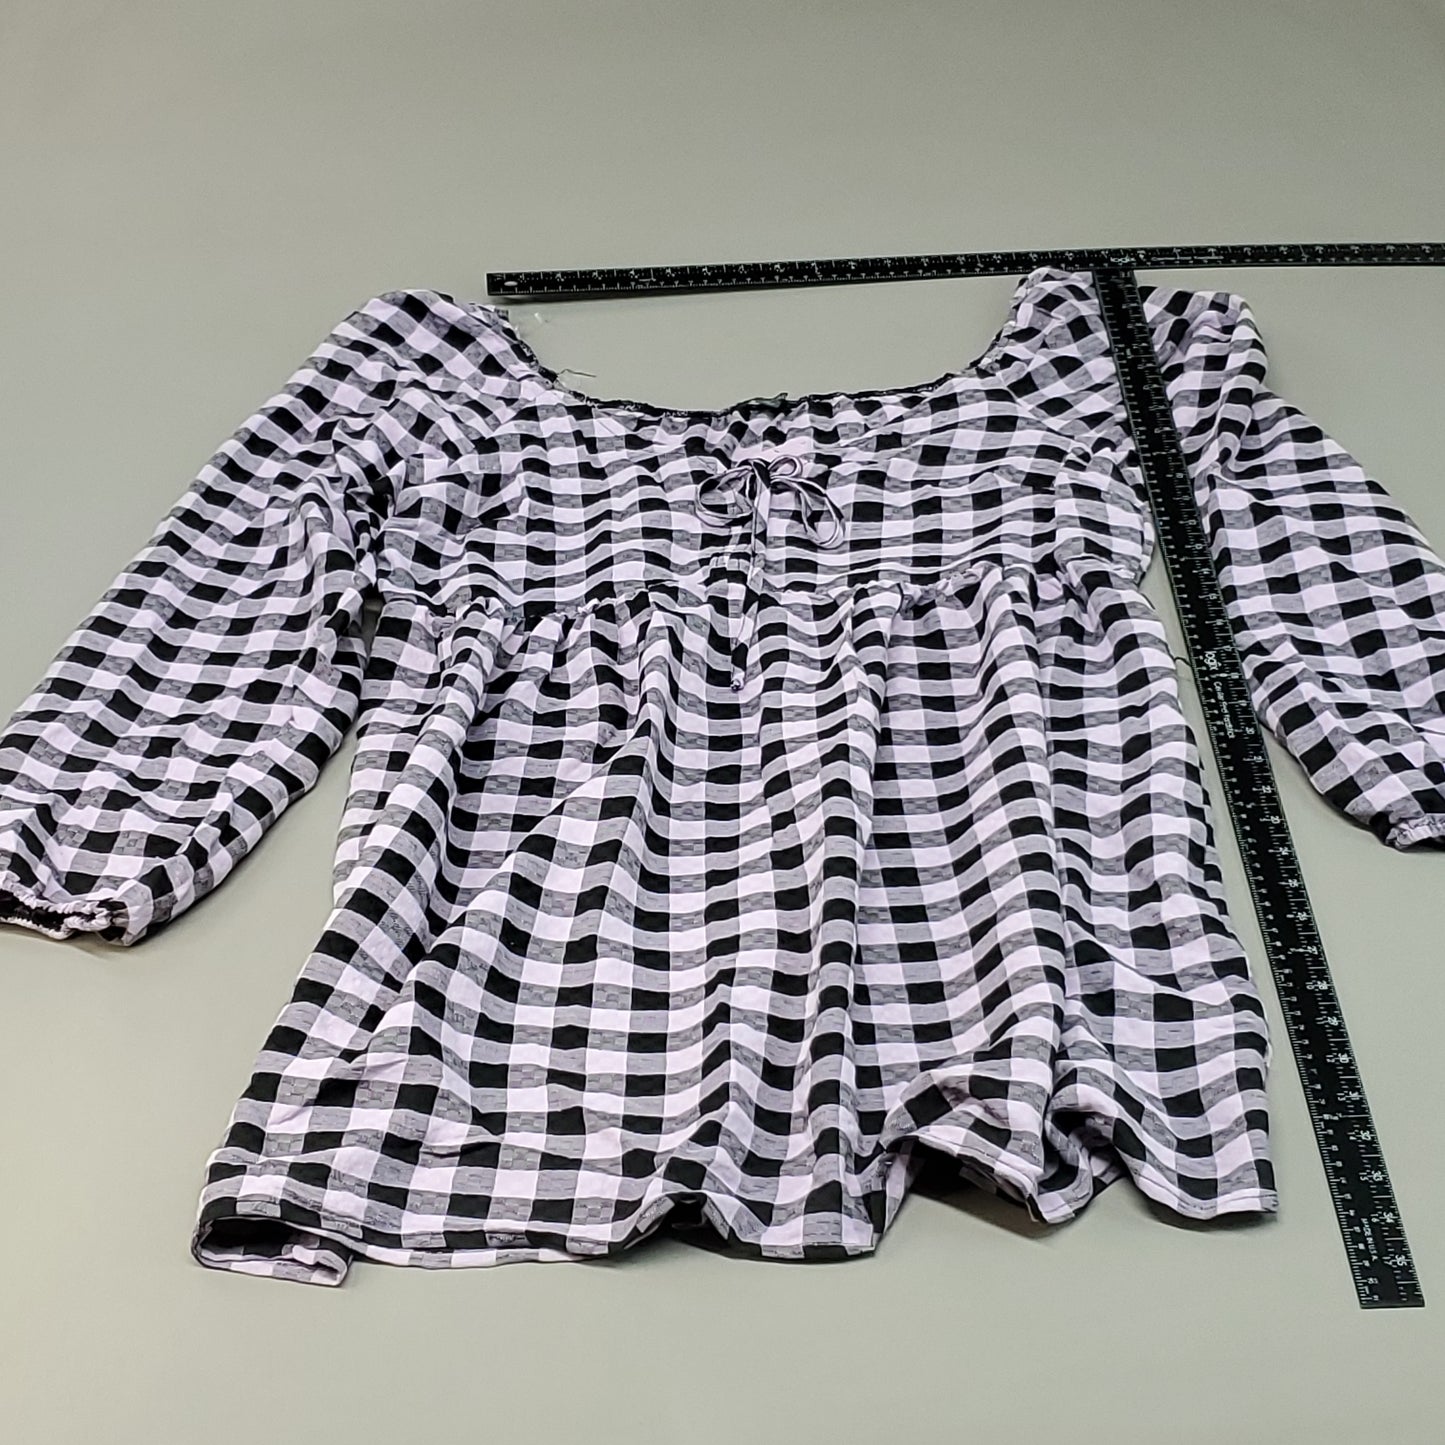 WILD FABLE Women's Amethyst Checkered Dress Sz XL Black/Pink 331 08 6996 (New)